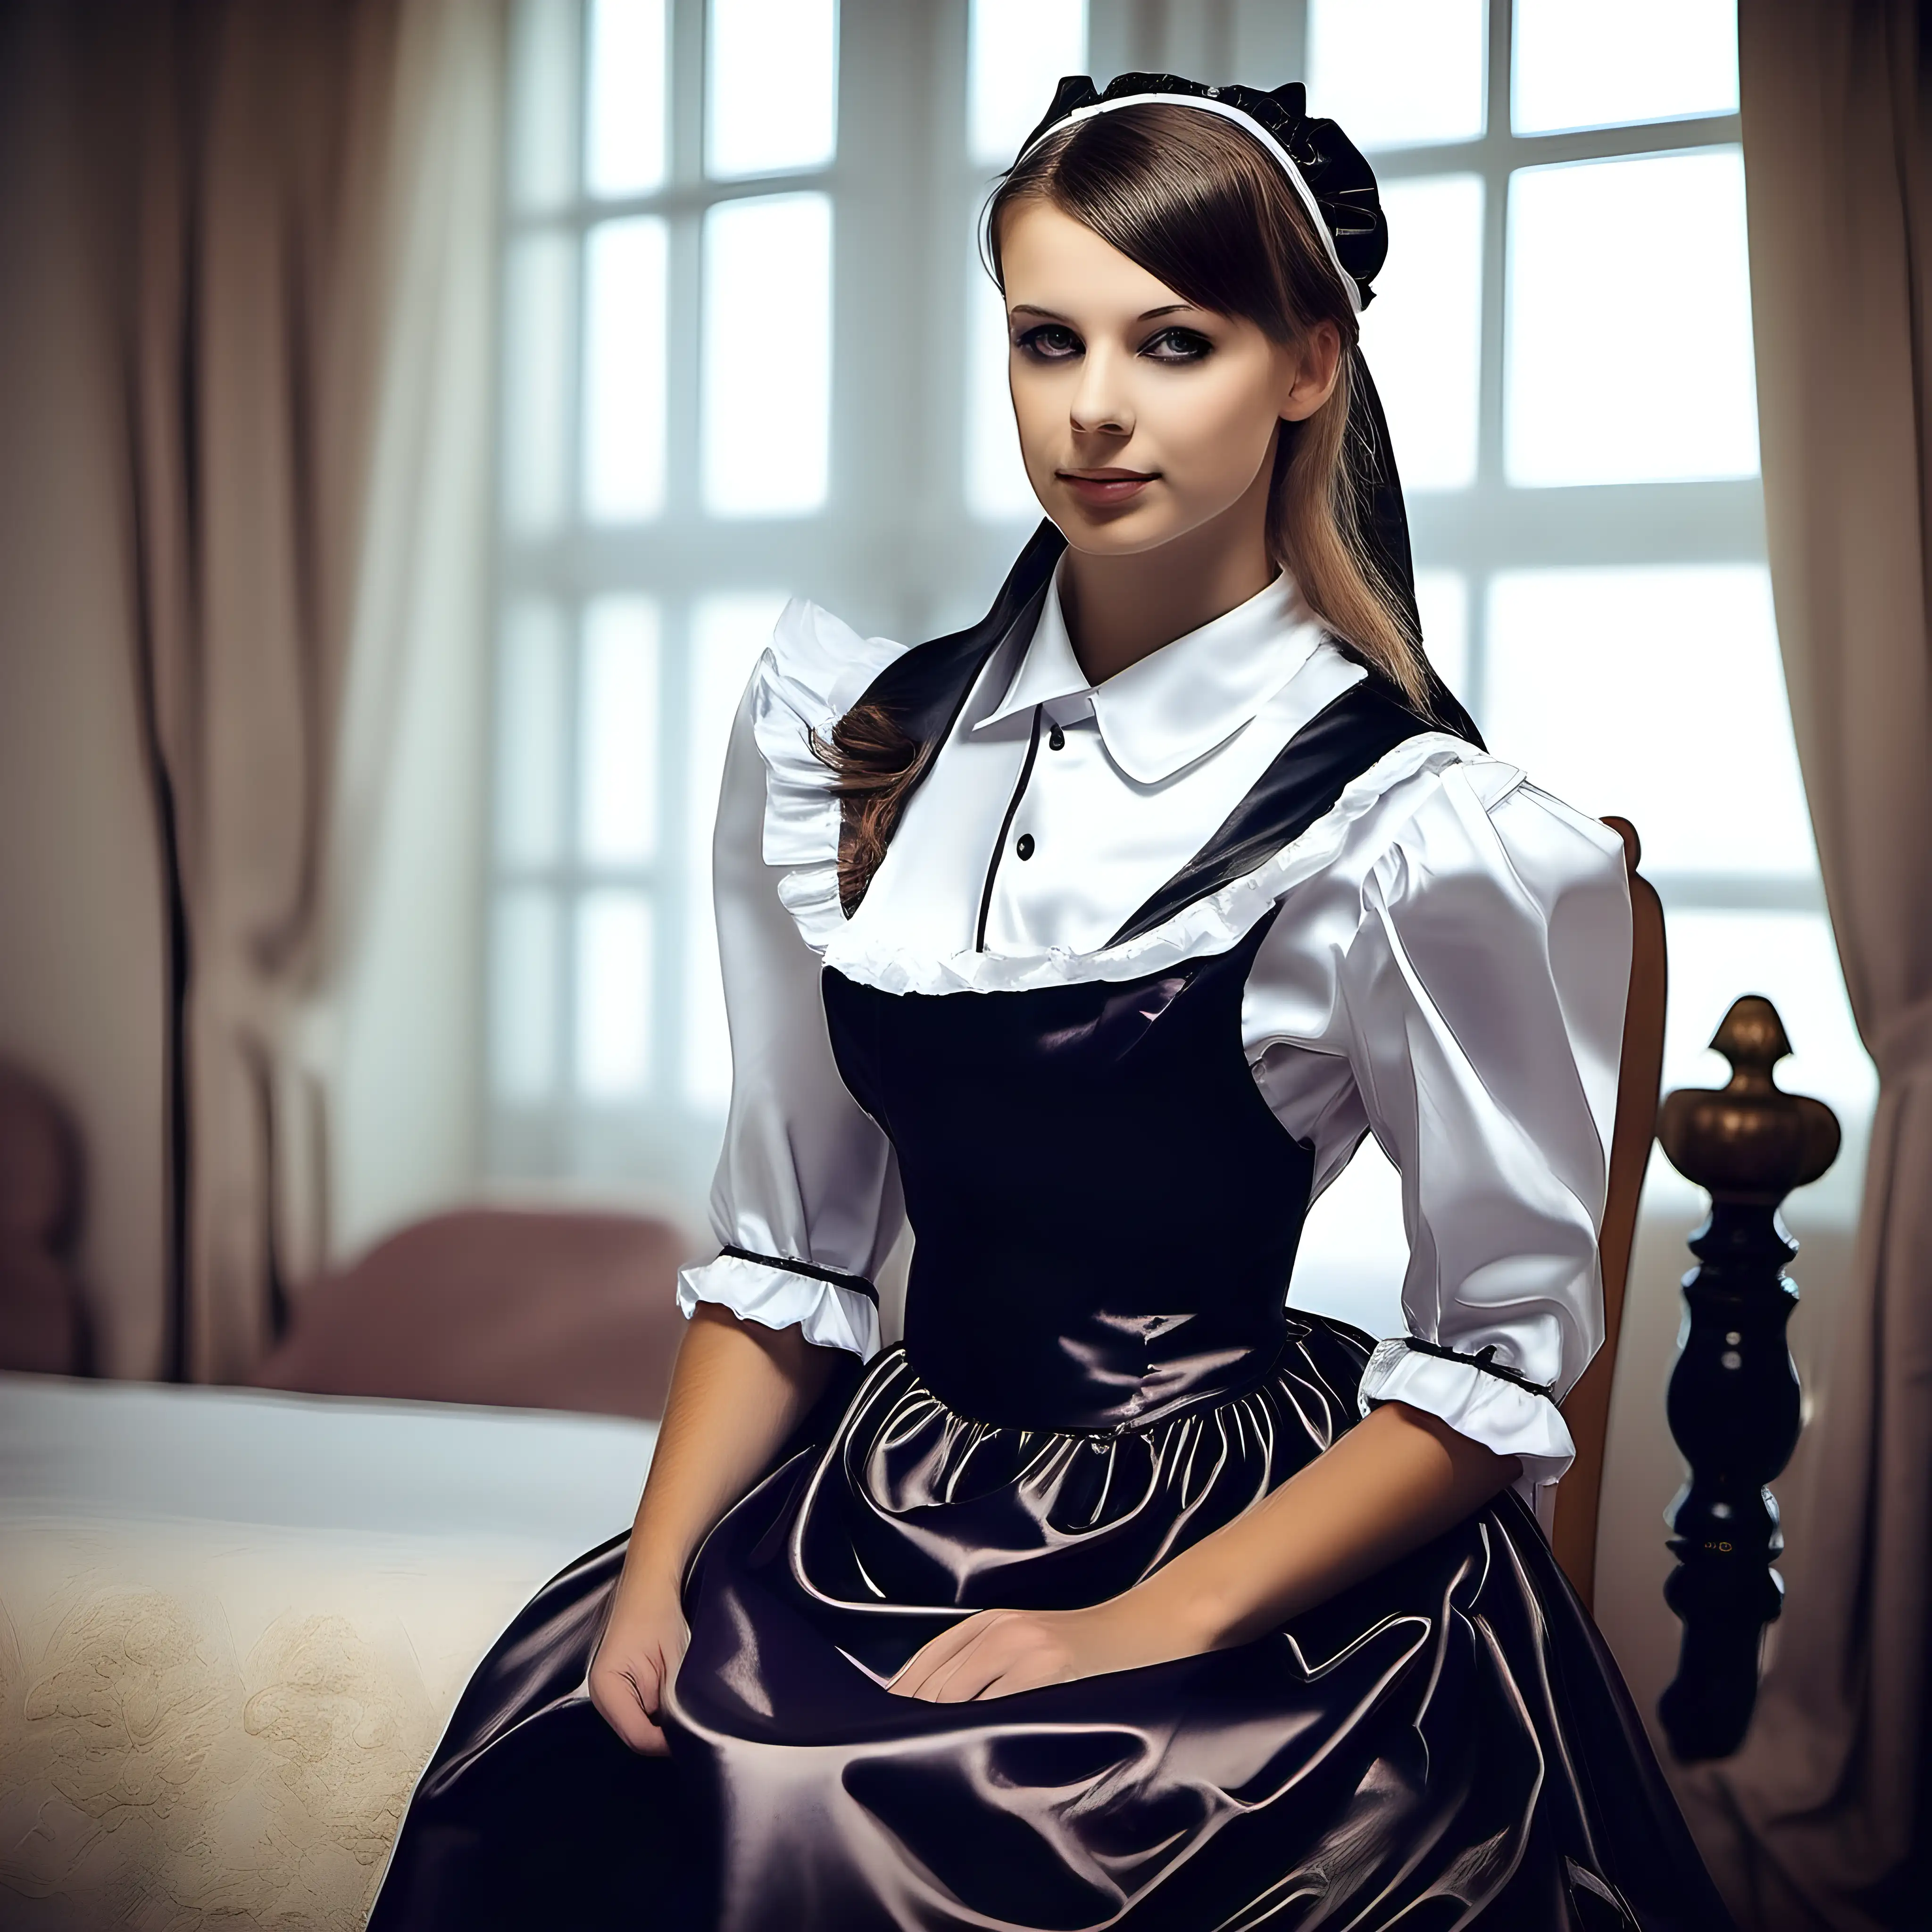 european Girl in satin long maid uniforms